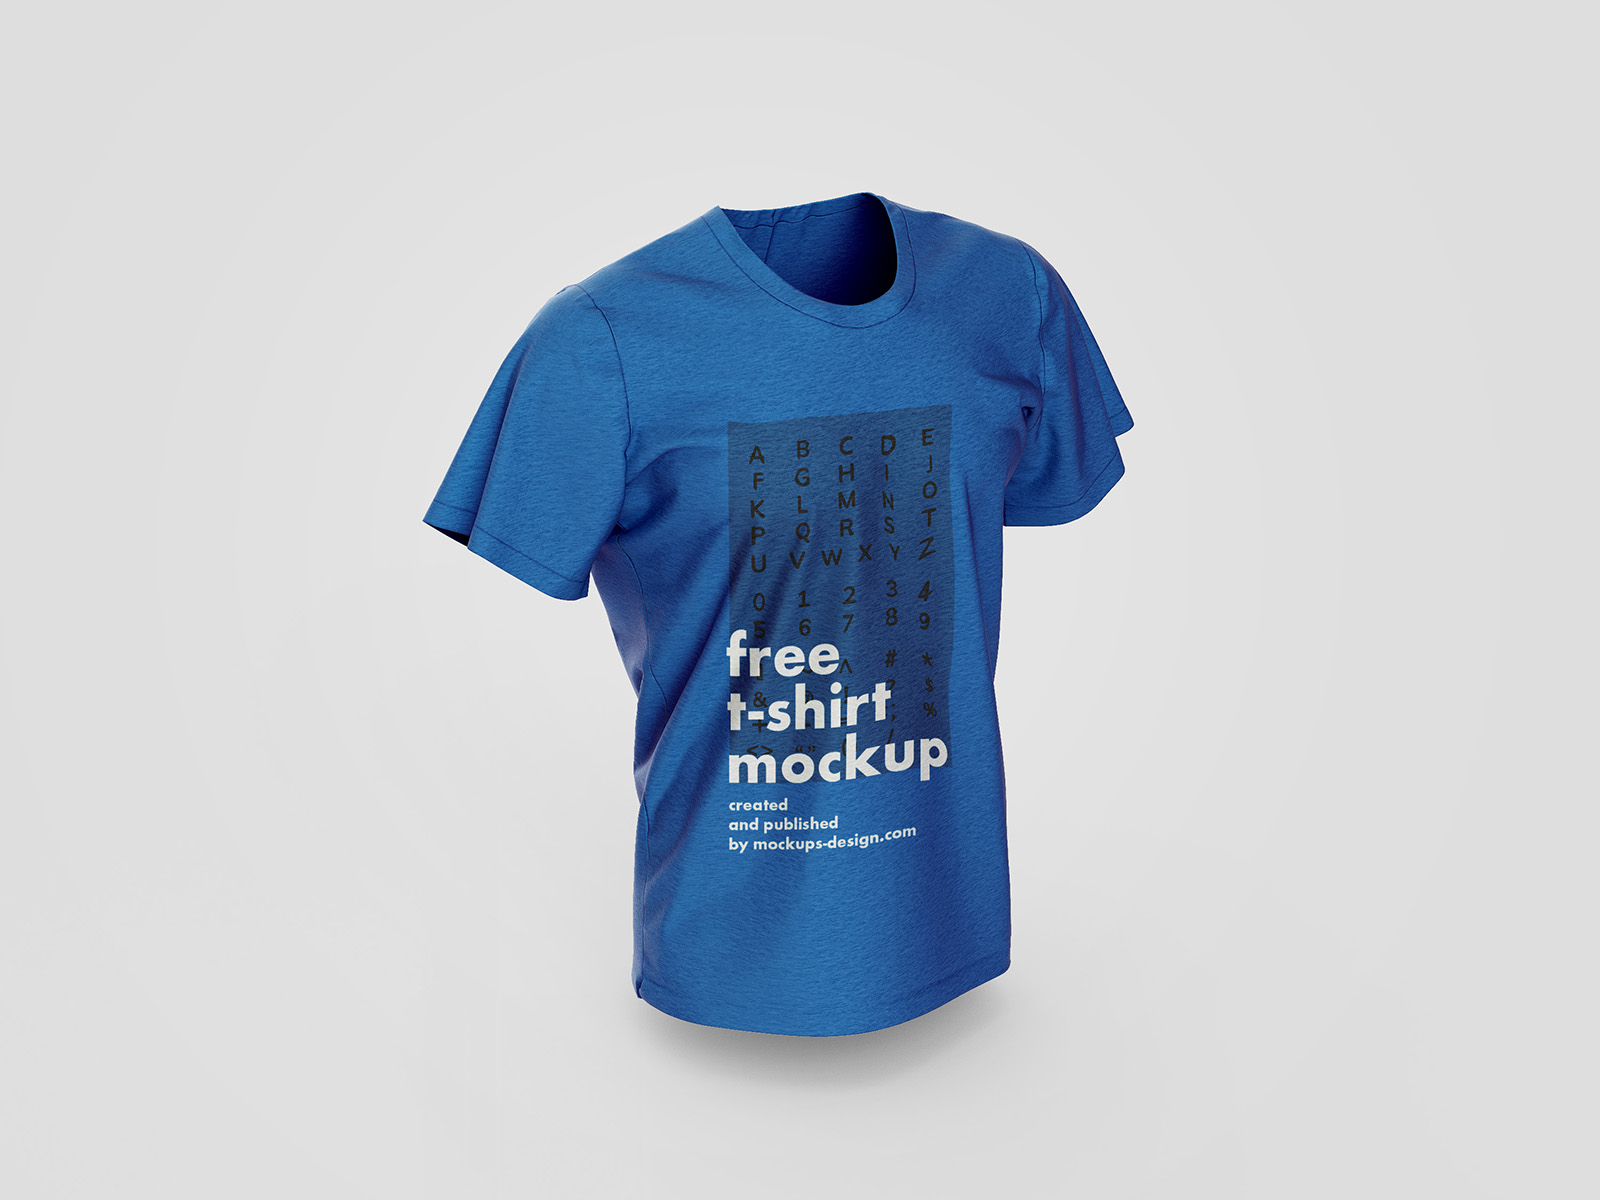 Geometry Auckland mount Free t-shirt mockup - Mockups Design